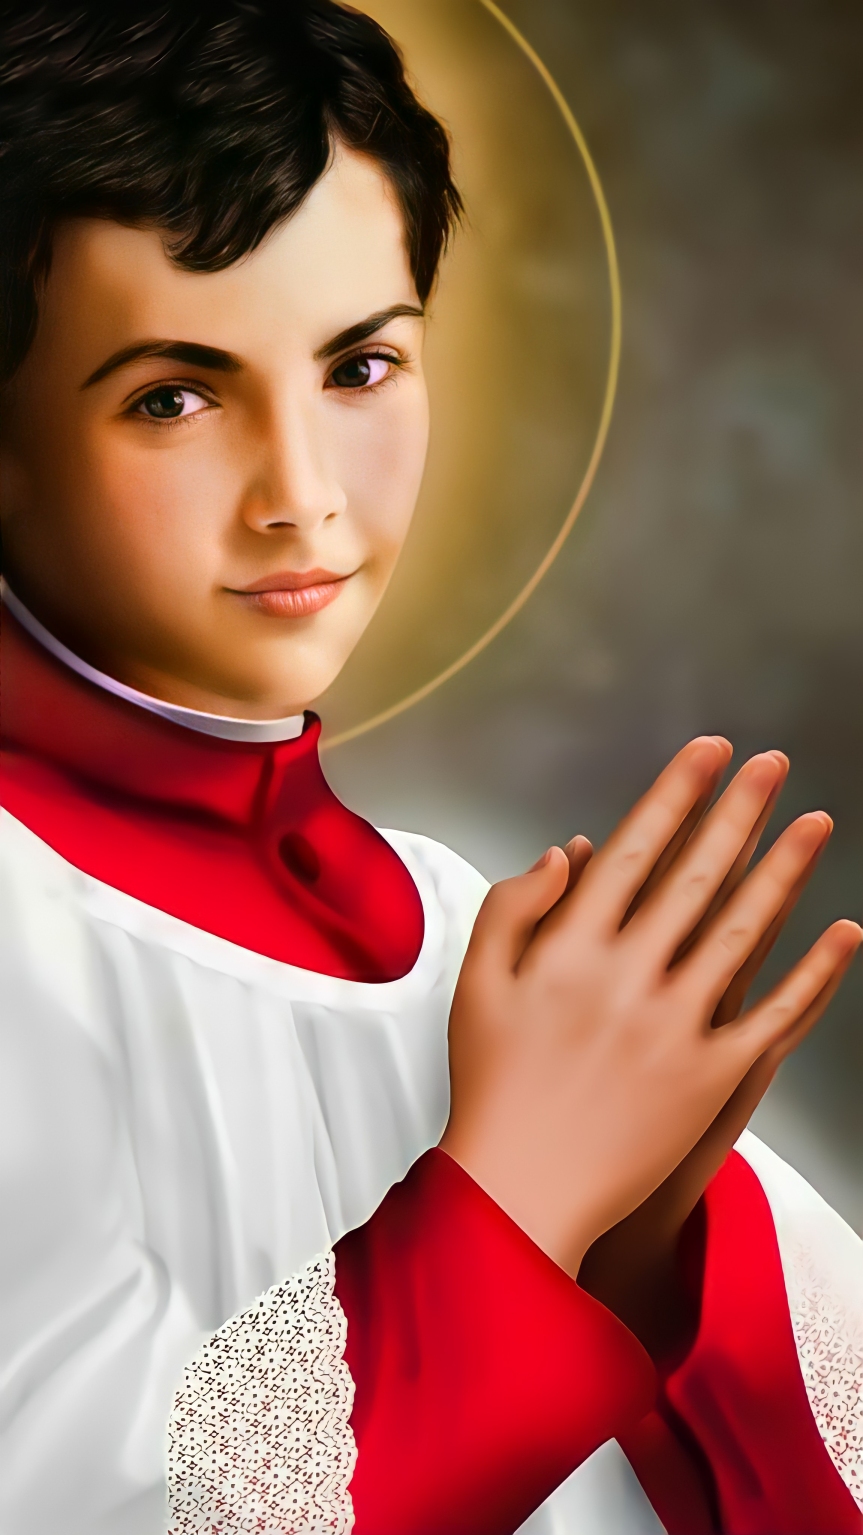 May 6 | St. Dominic Savio | വിശുദ്ധ ഡൊമിനിക് സാവിയോ